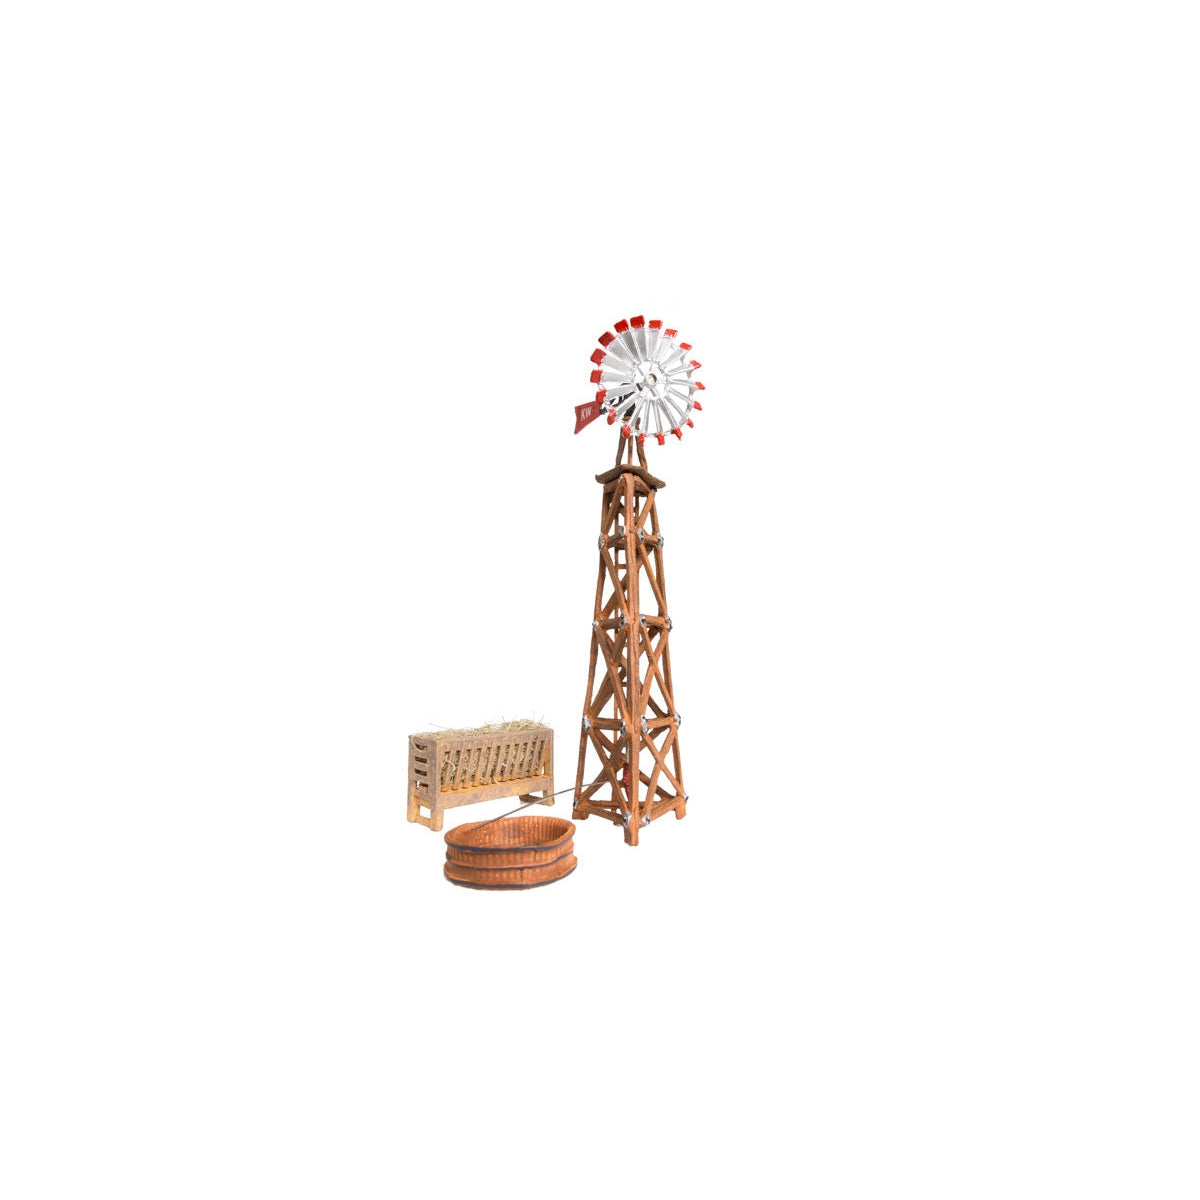 Woodland Scenics 4937 Windmill - N Scale